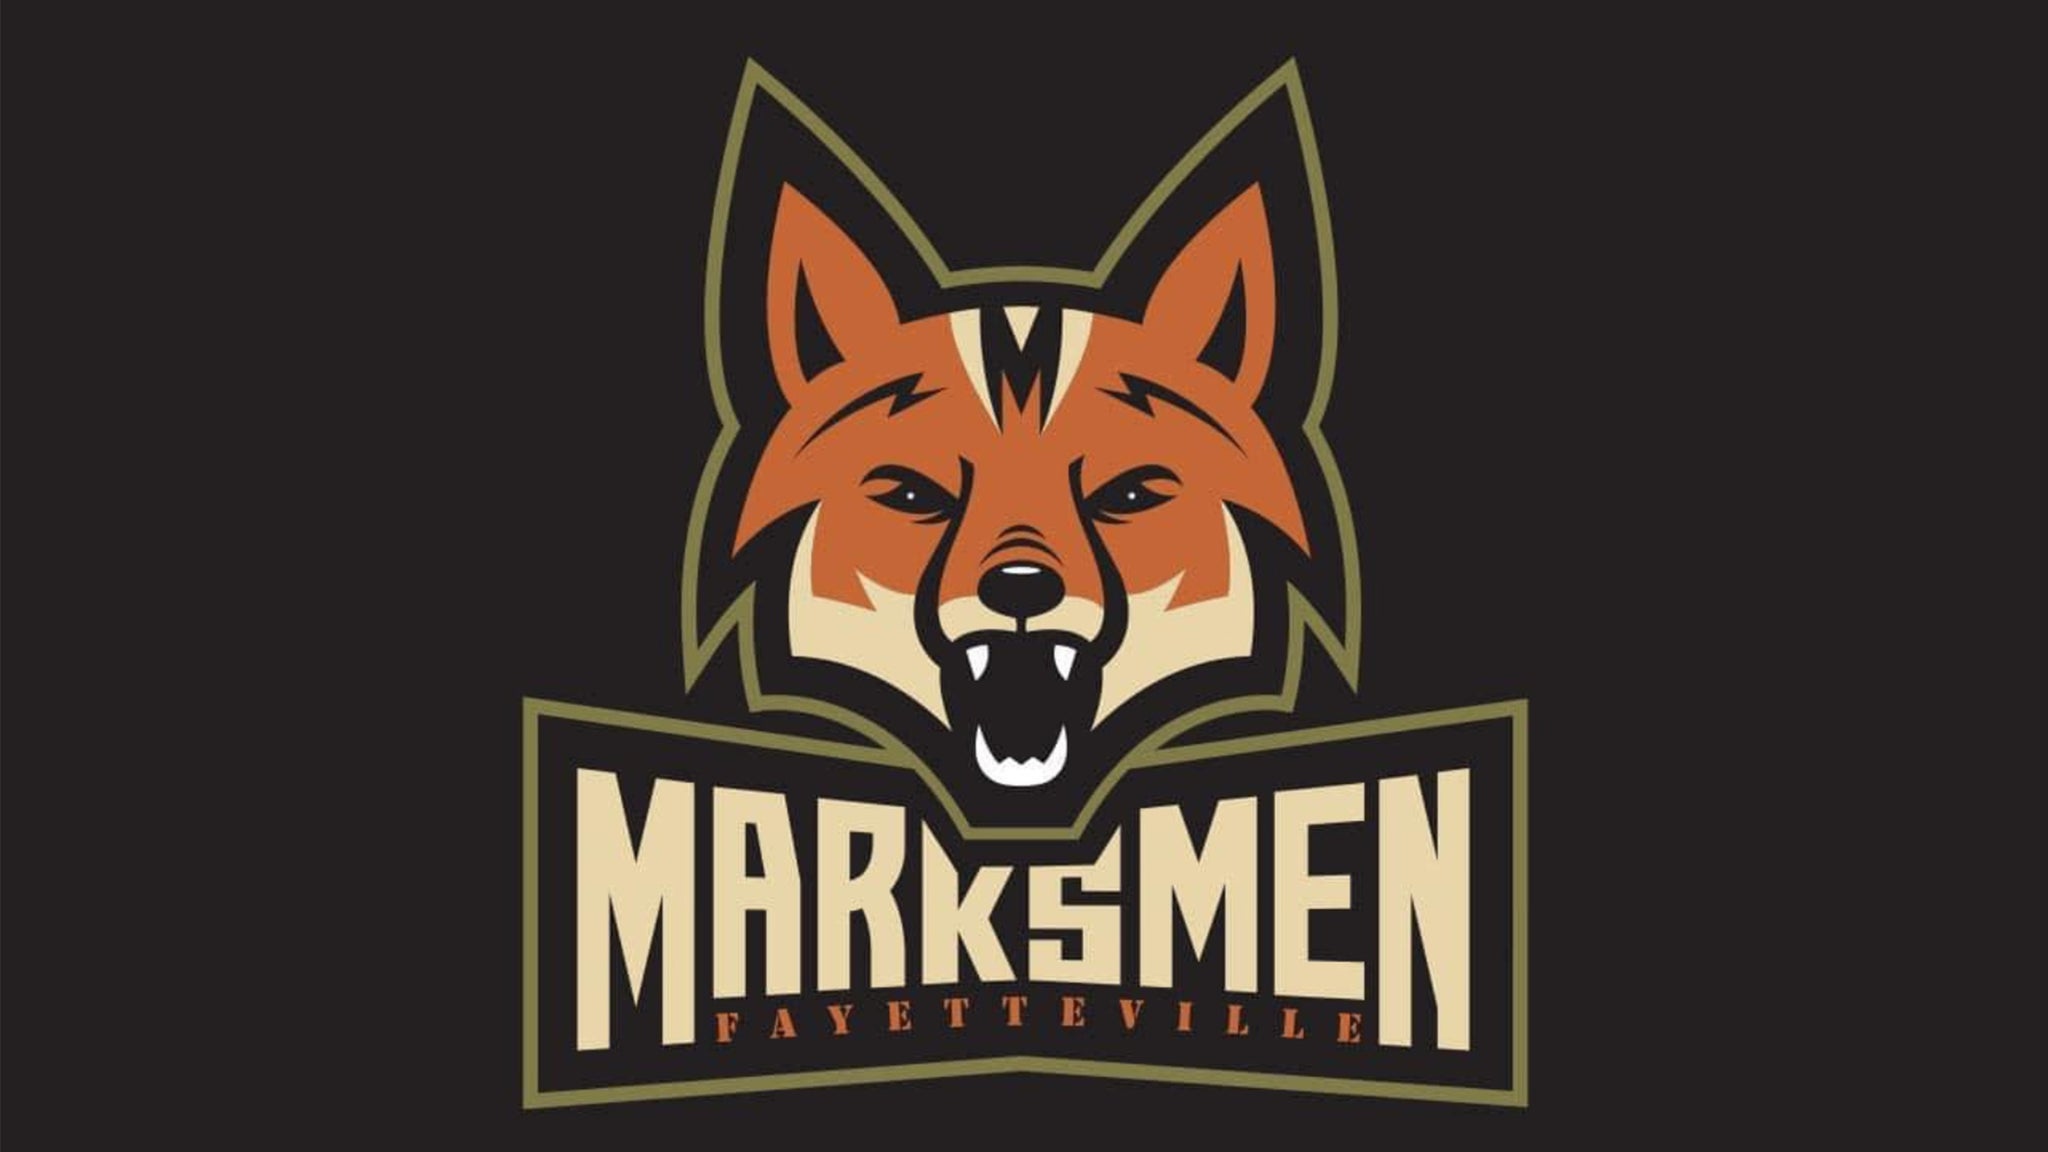 Fayetteville Marksmen vs. Vermilion County Bobcats Hockey Team